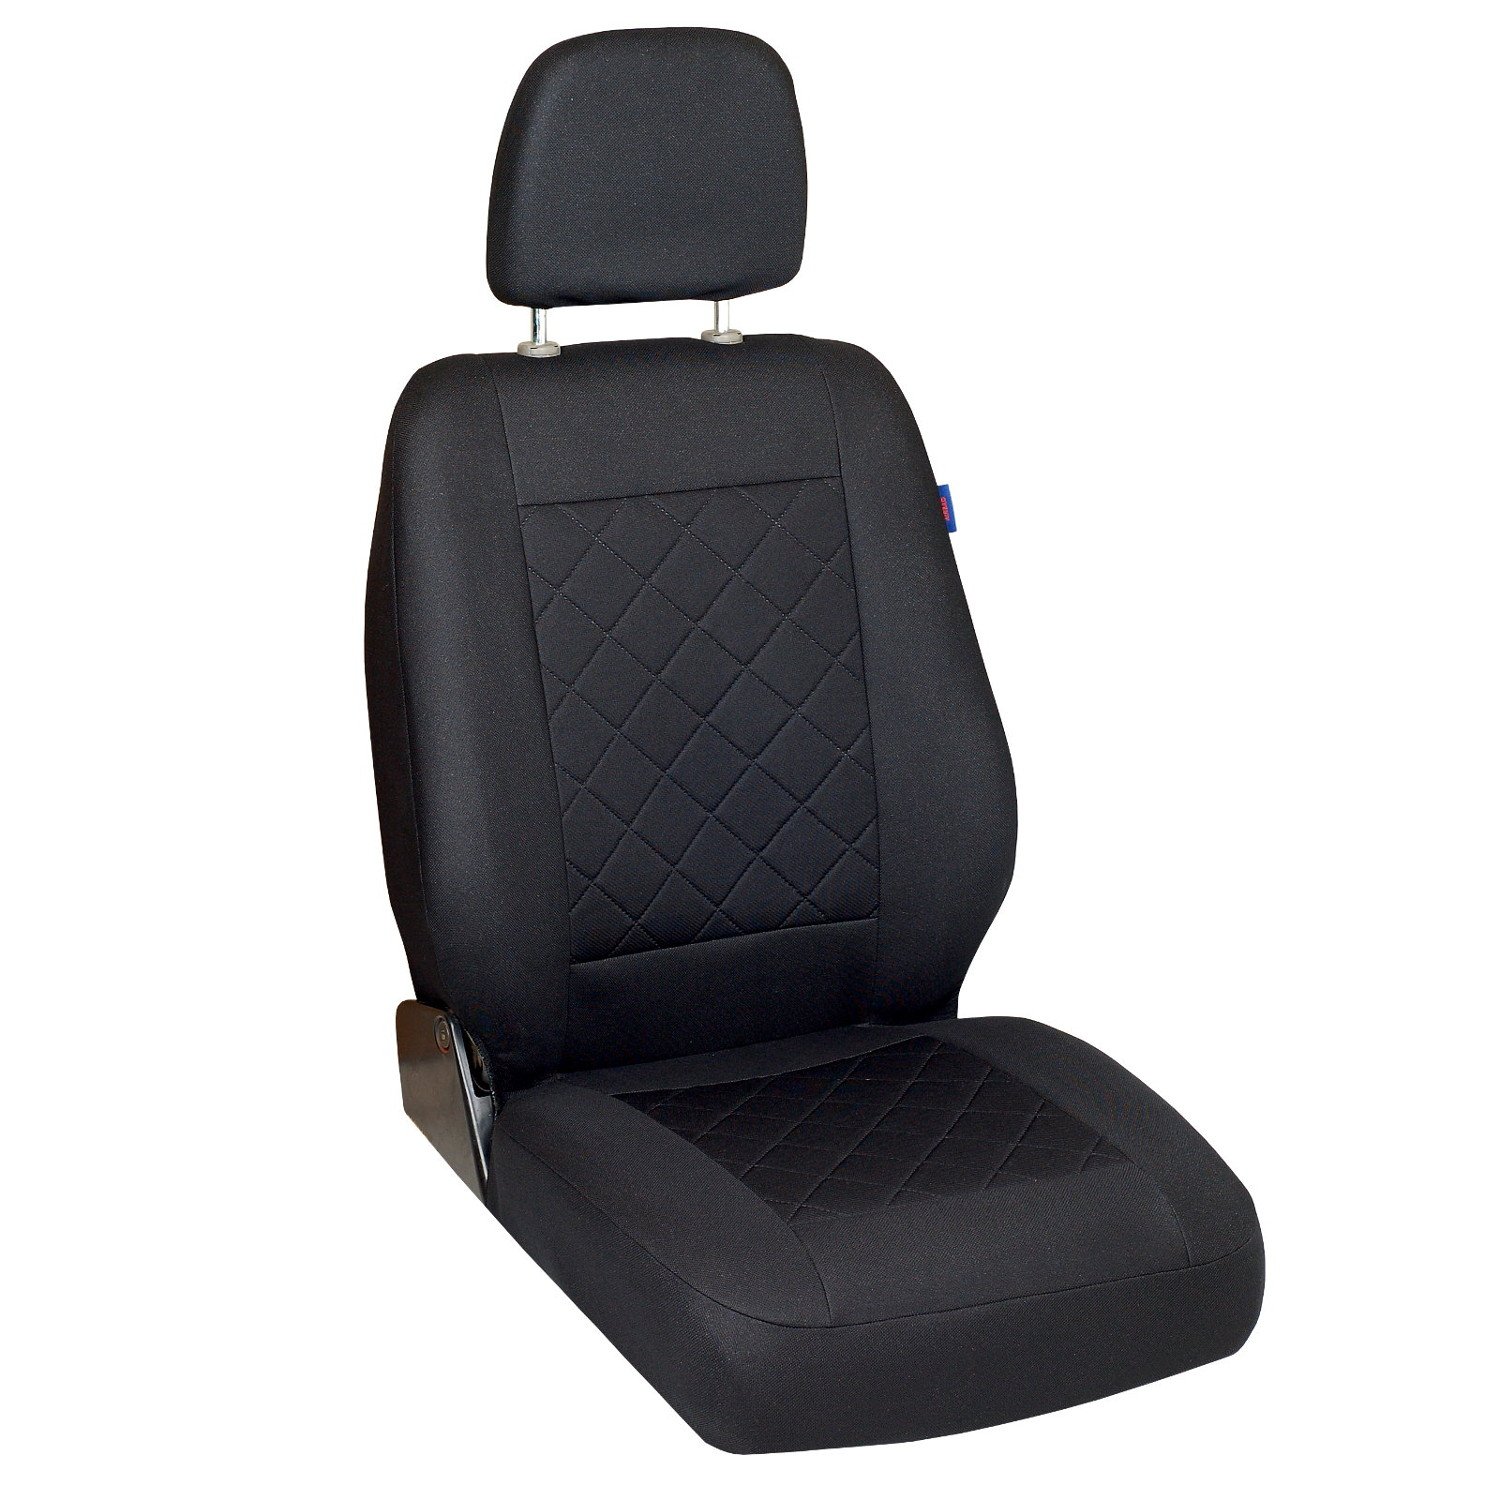 H1 Cargo Sitzbezug - Fahrersitz - Farbe Premium Schwarz gepresstes Karomuster